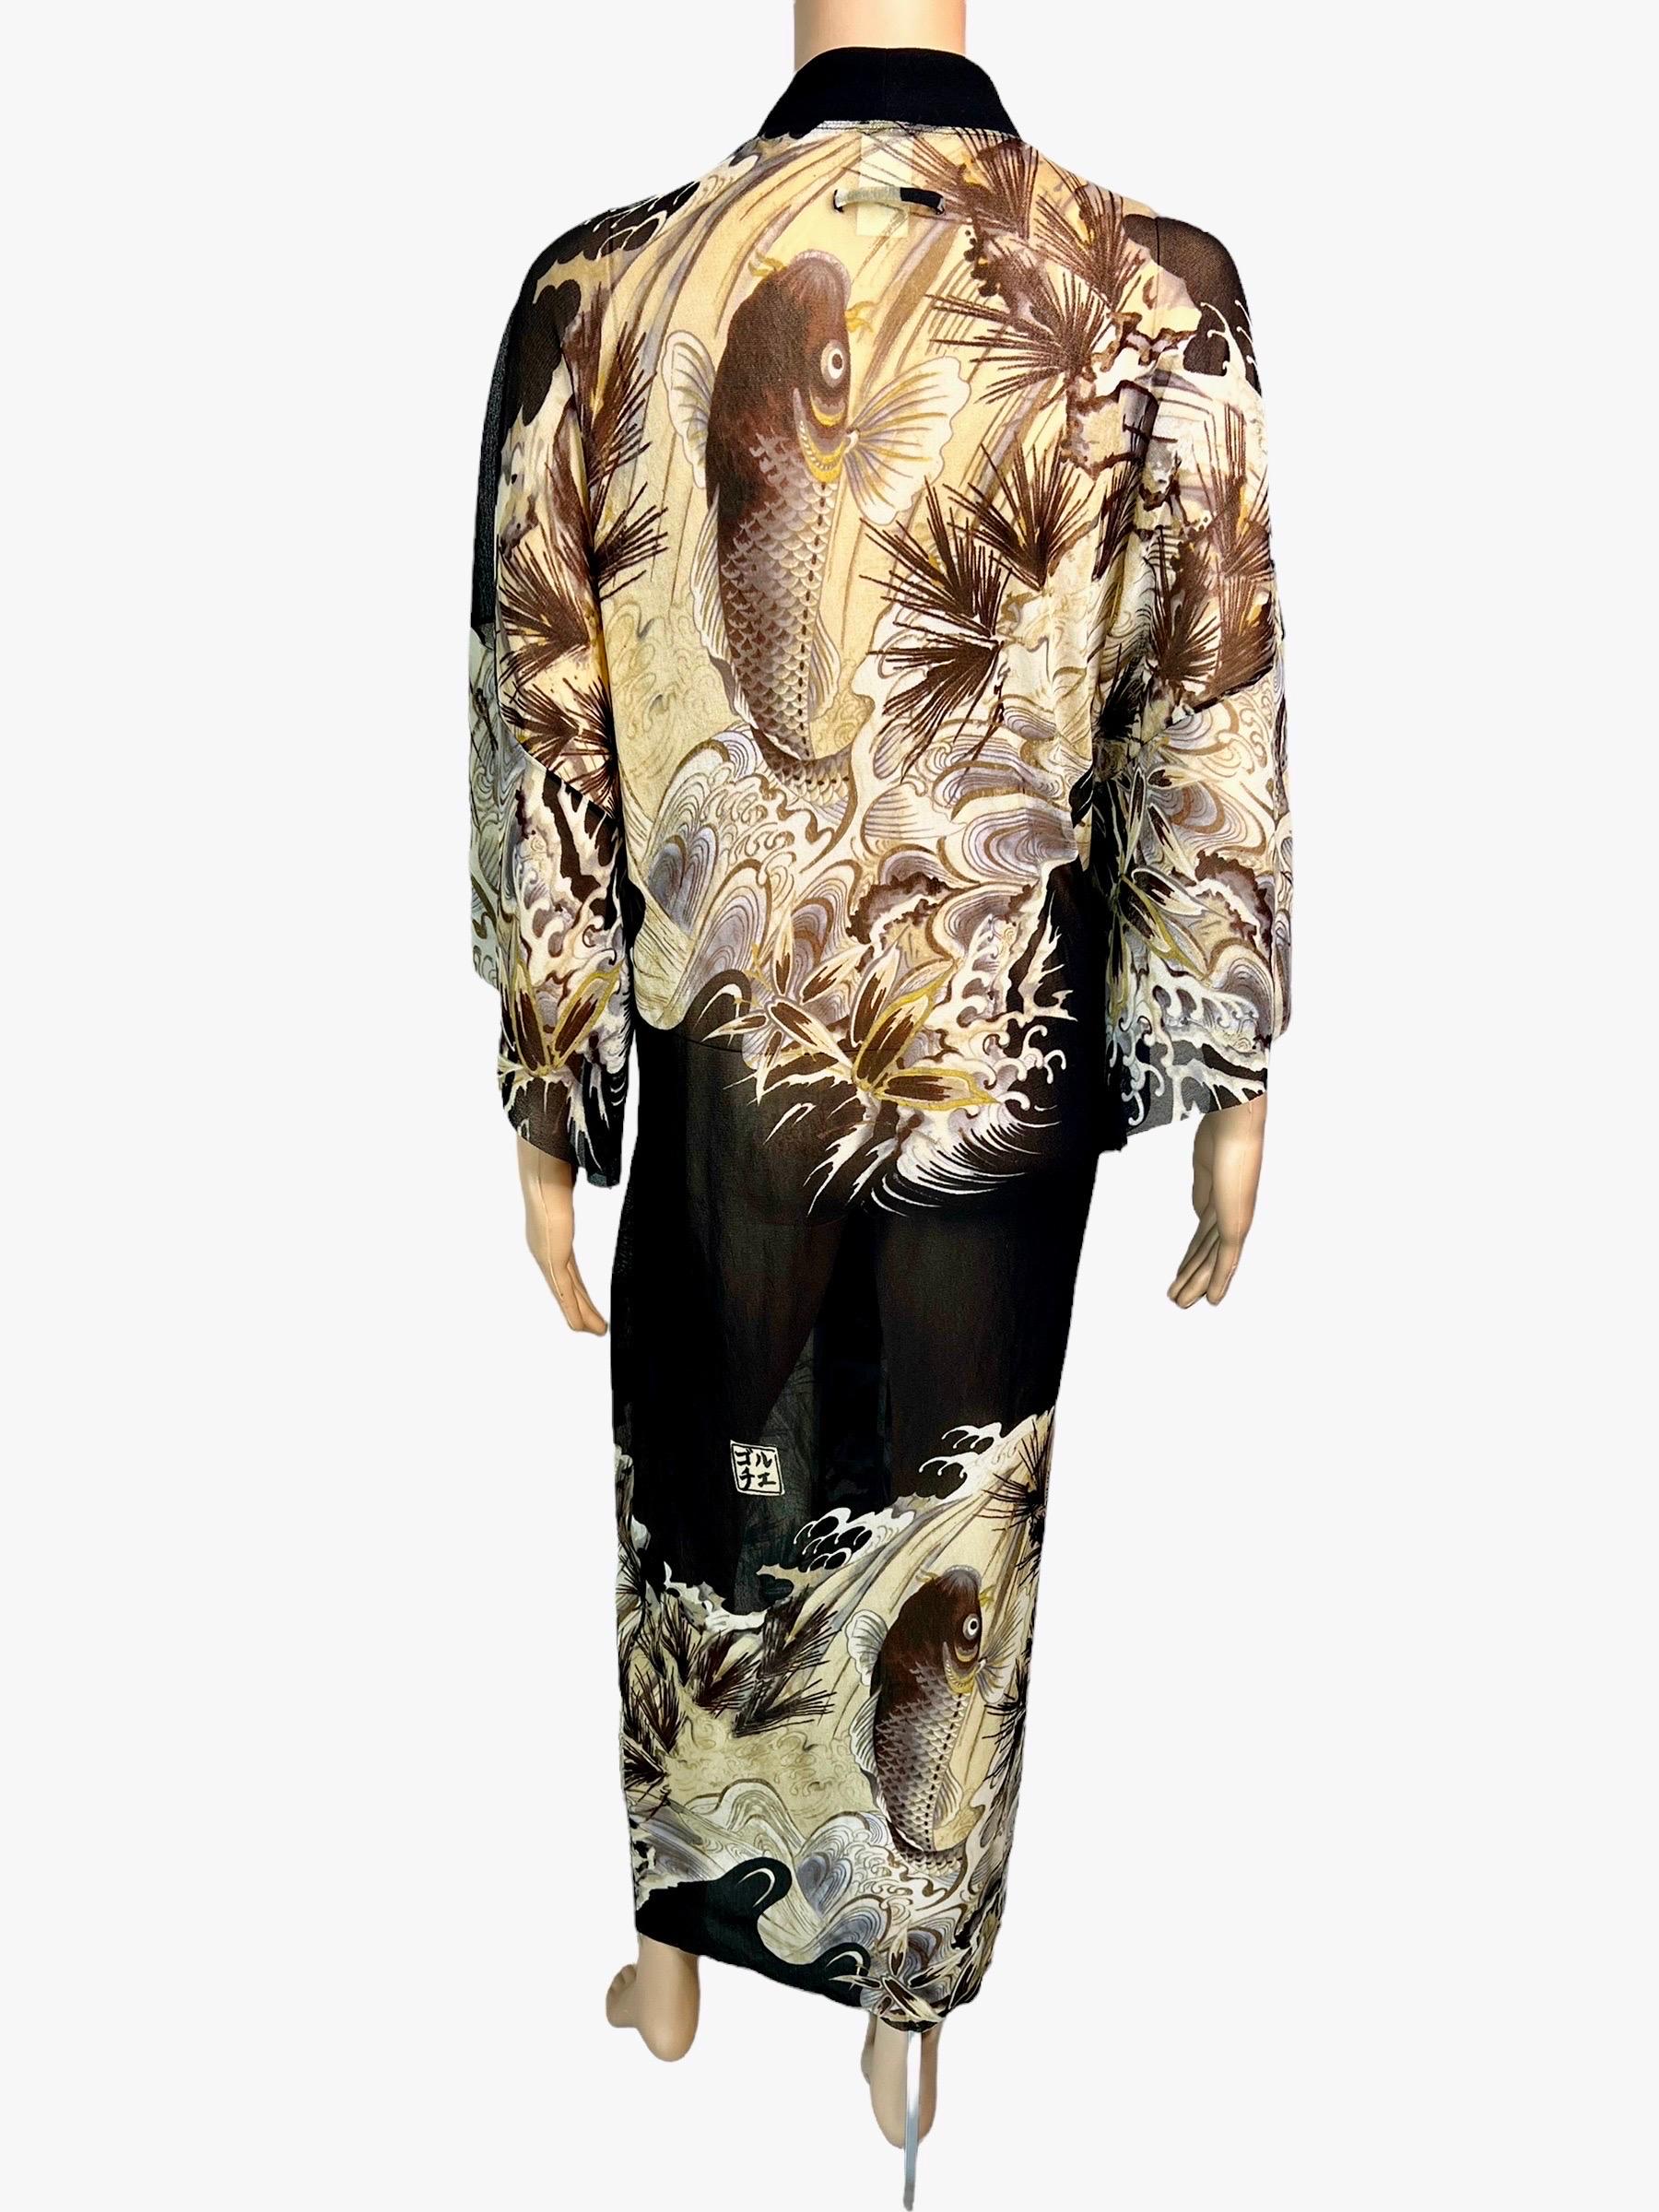 Jean Paul Gaultier Soleil Vintage Japanese Koi Fish Tattoo Print Sheer Mesh Maxi Dress Kimono Size M


